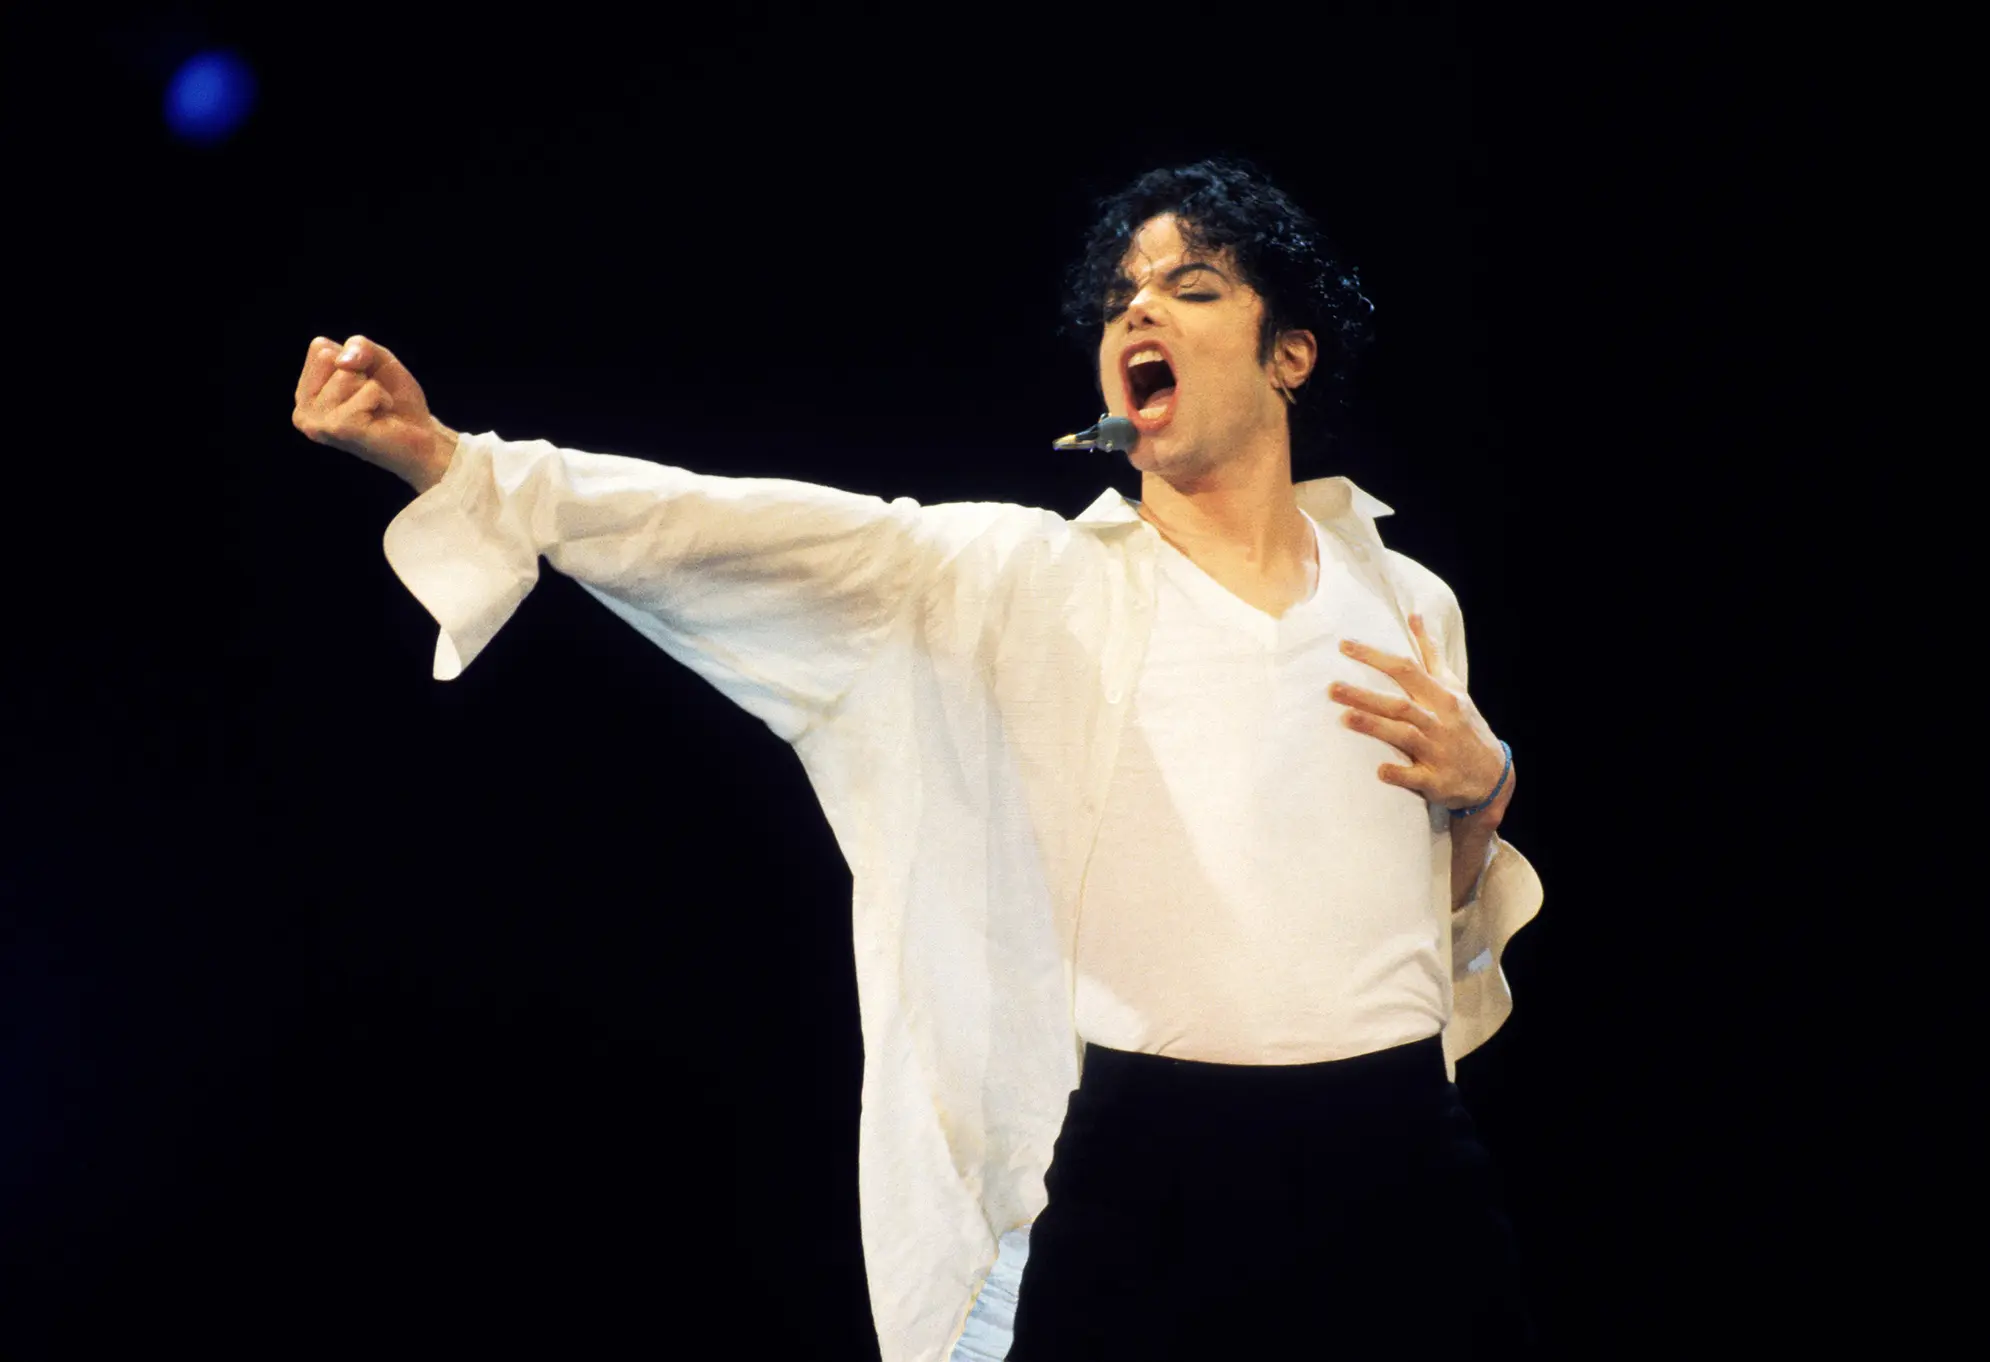 Michael Jackson (MTV.com)